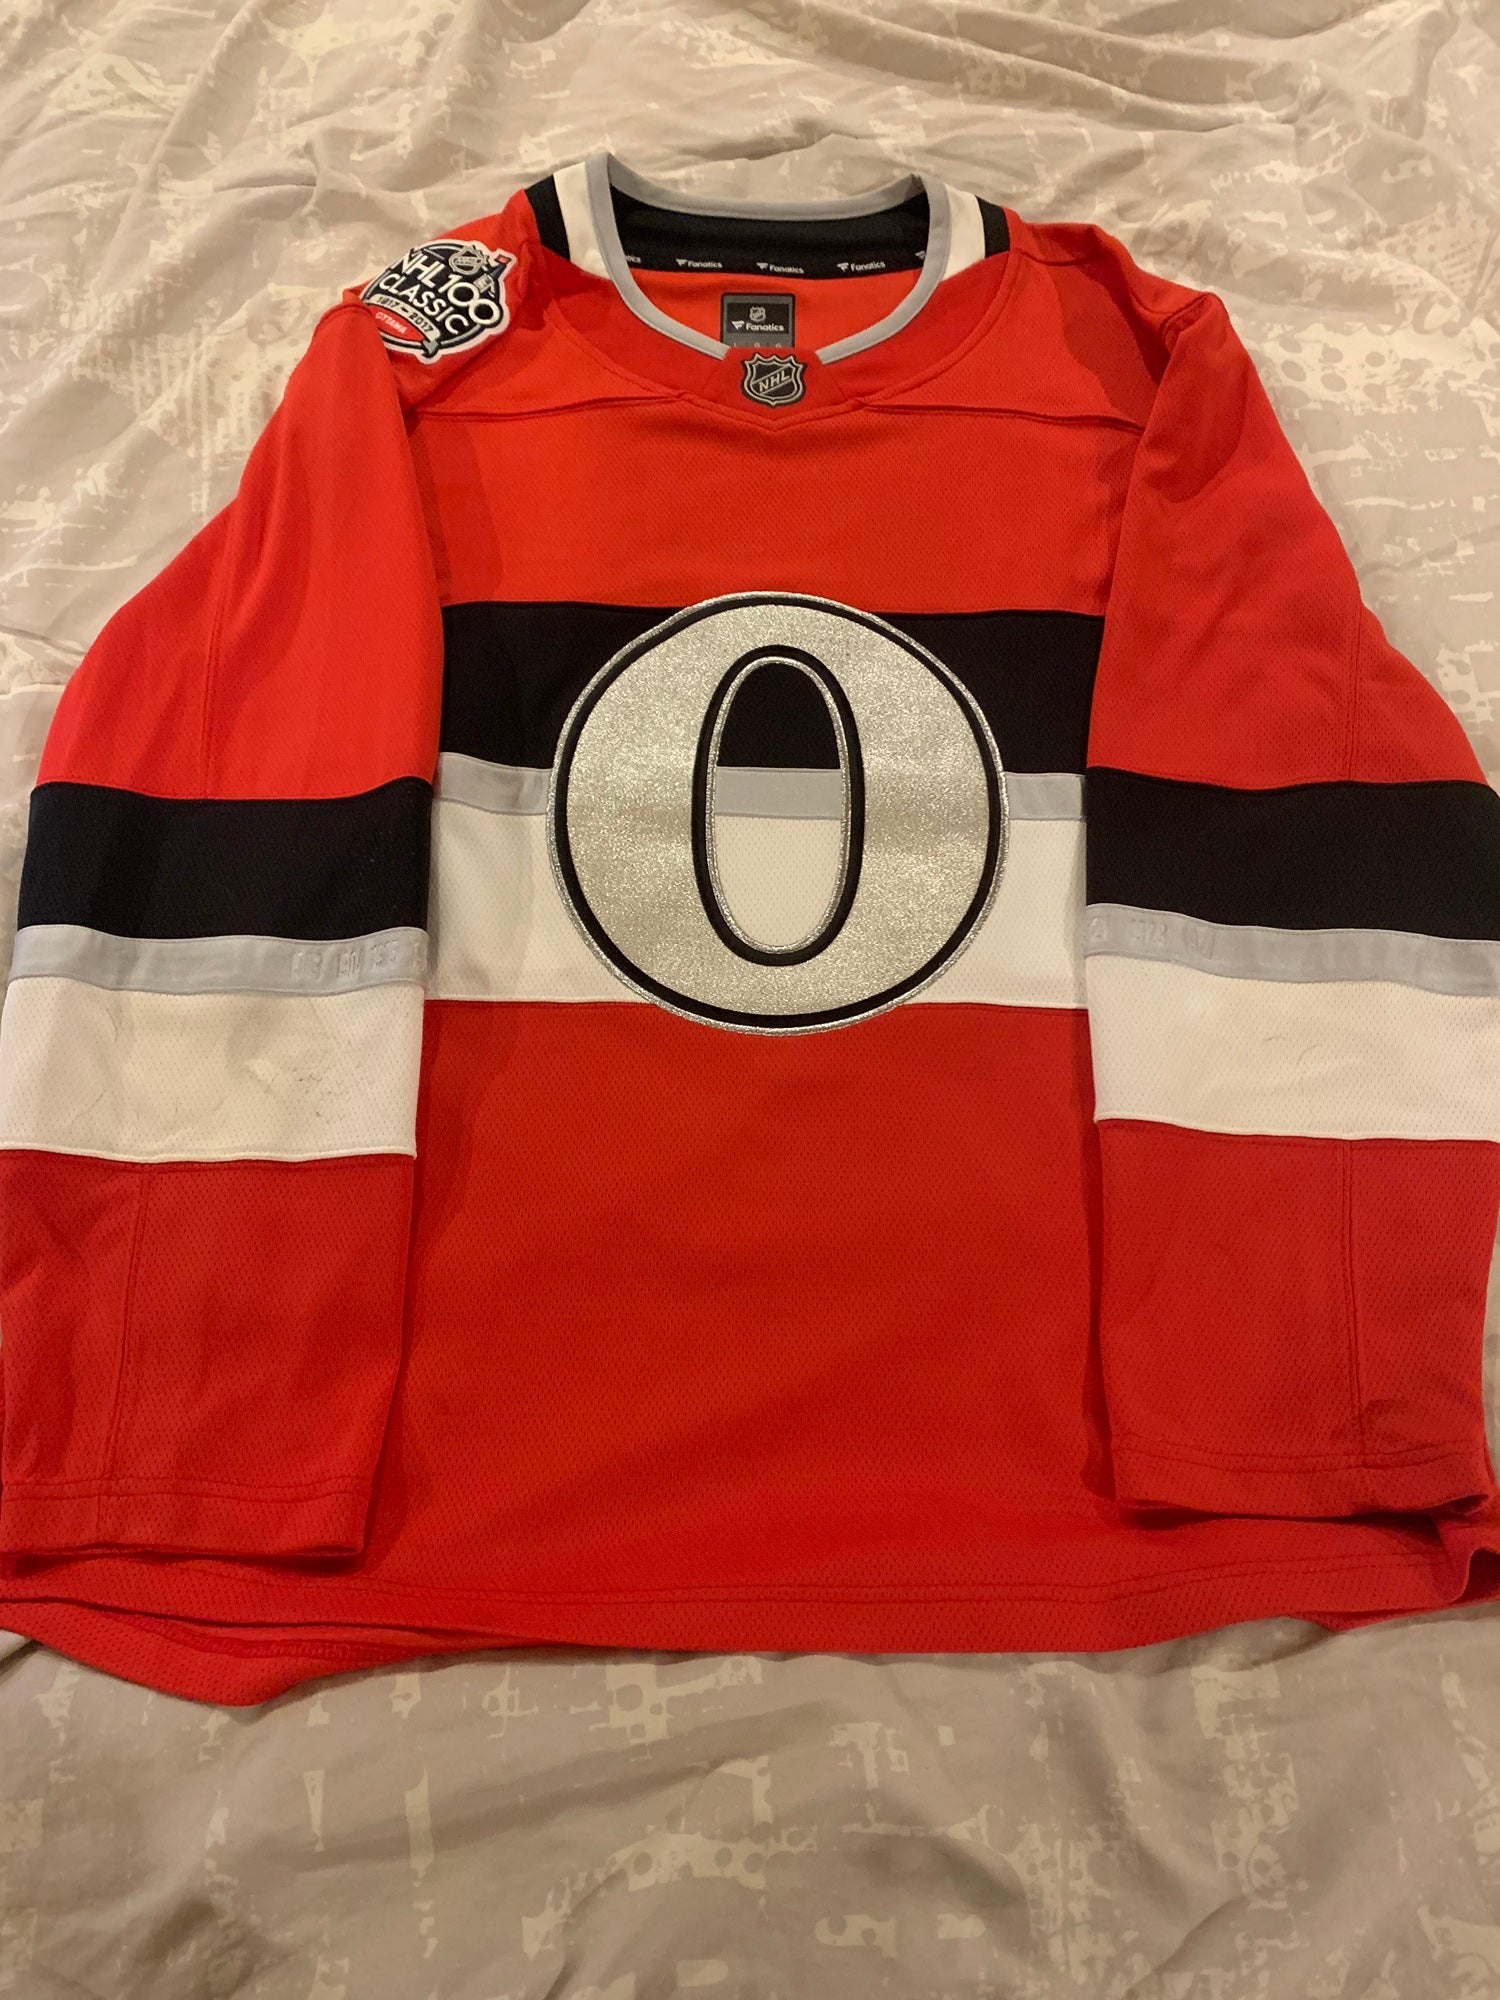 Official Senators jersey for NHL centennial unveiled